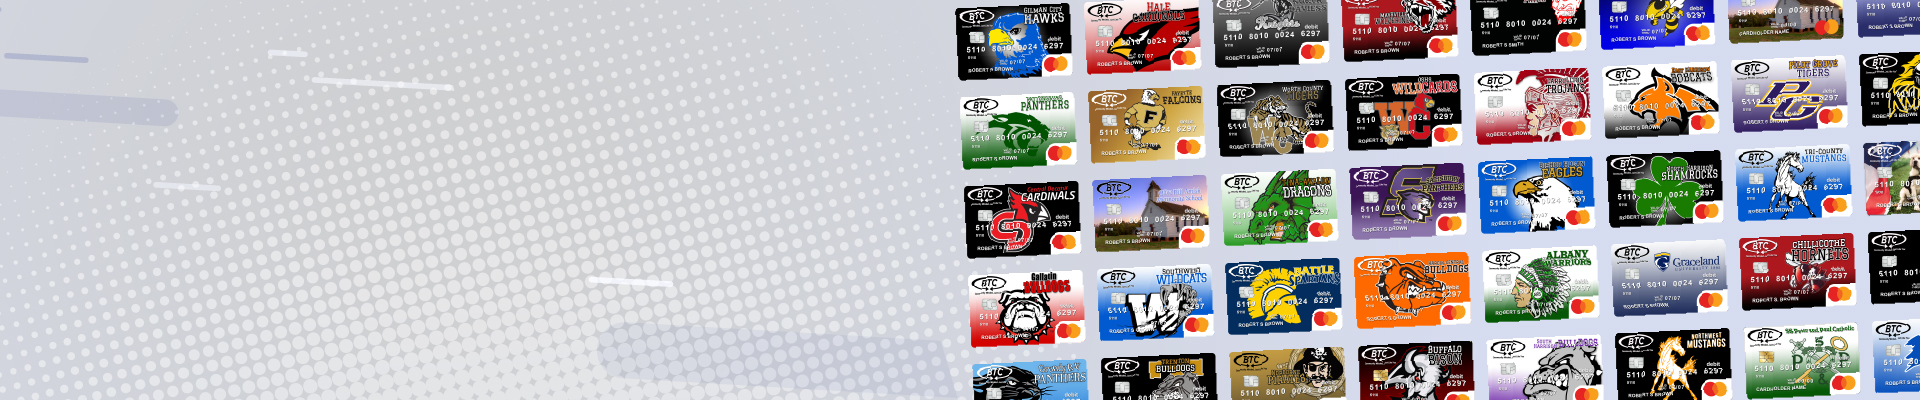 BTC Bank mascot debit cards for multiple Missouri schools. Debit cards have each school's mascot on it.